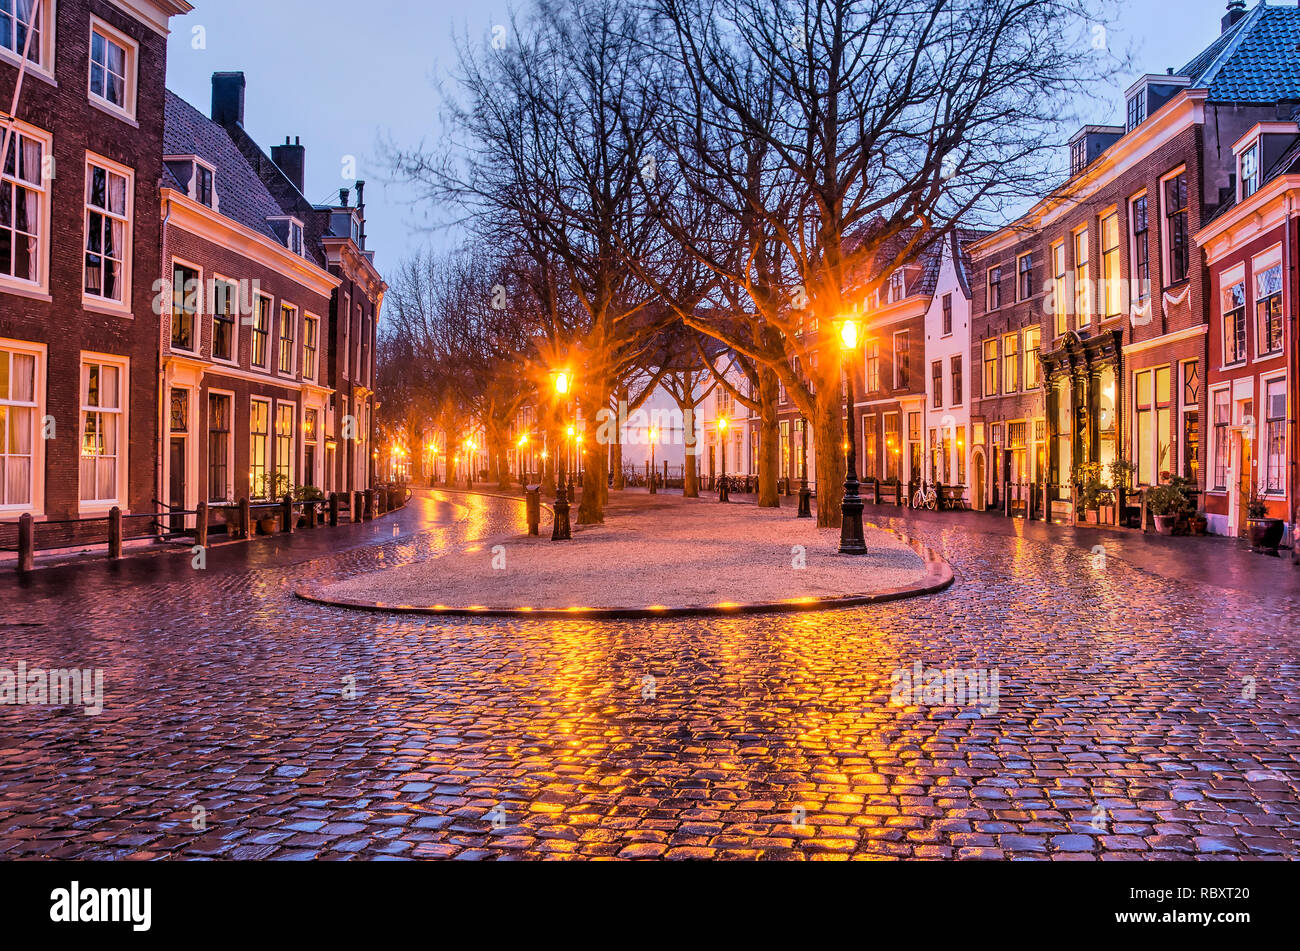 Leiden, The Netherlands, January 7, 2019: The light of od-fashioned street lanterns reflects on the cobblestone pavement of former canal Hooglandse Ke Stock Photo